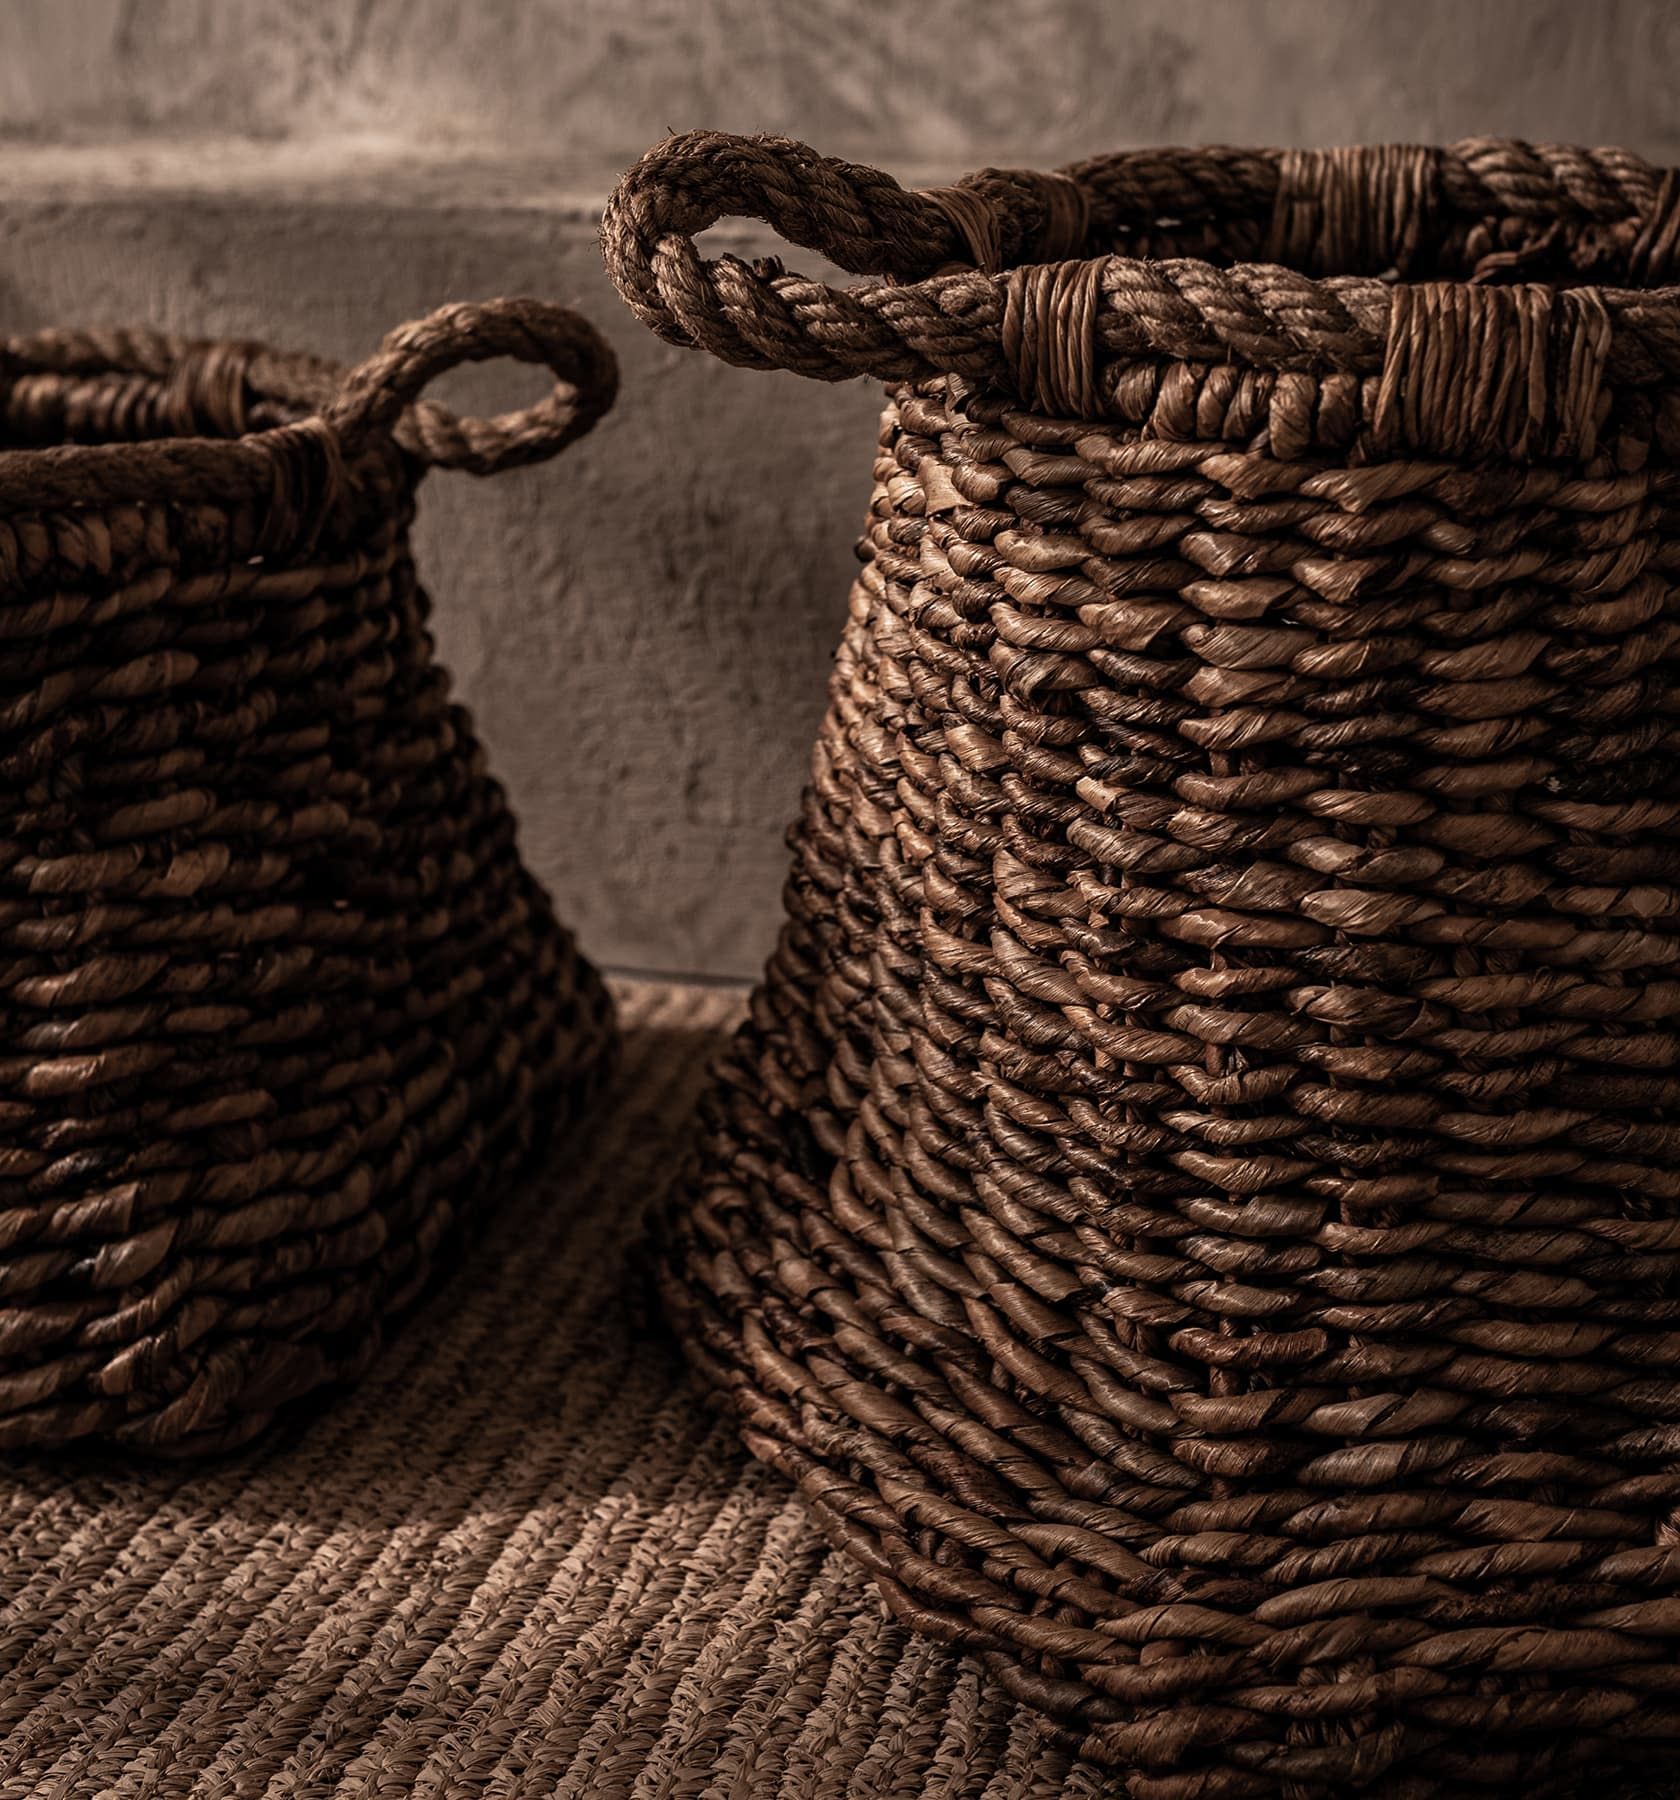 Basket GAMALAMA by DBODHI